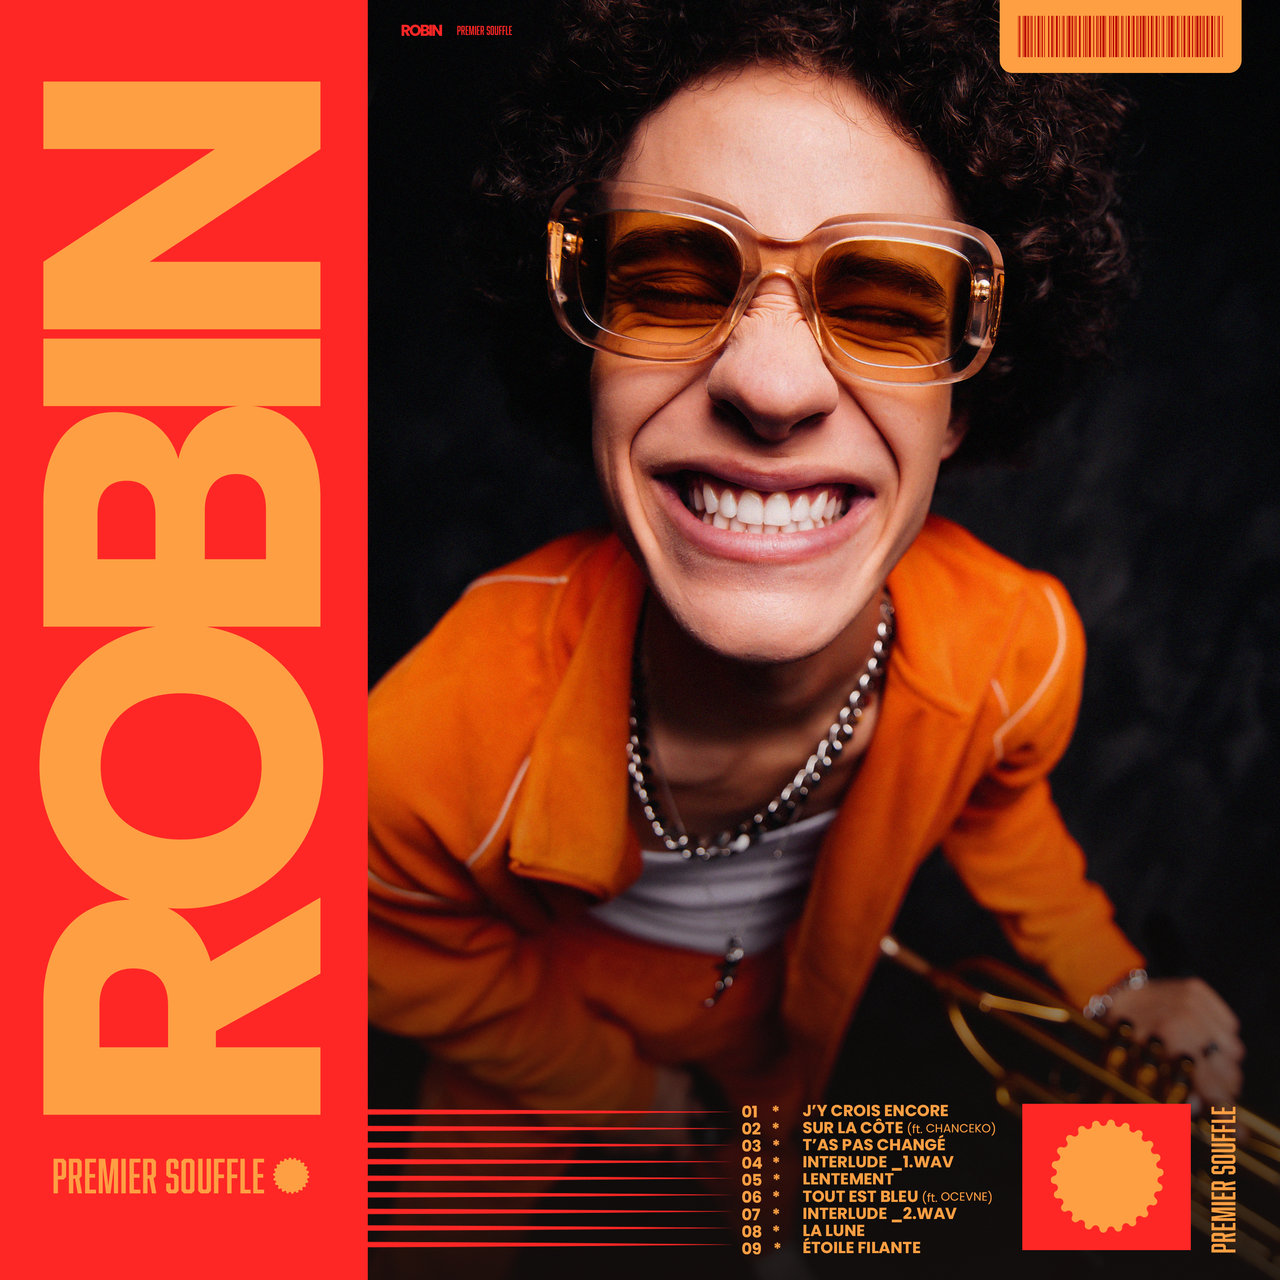 Robin Premier souffle cover artwork